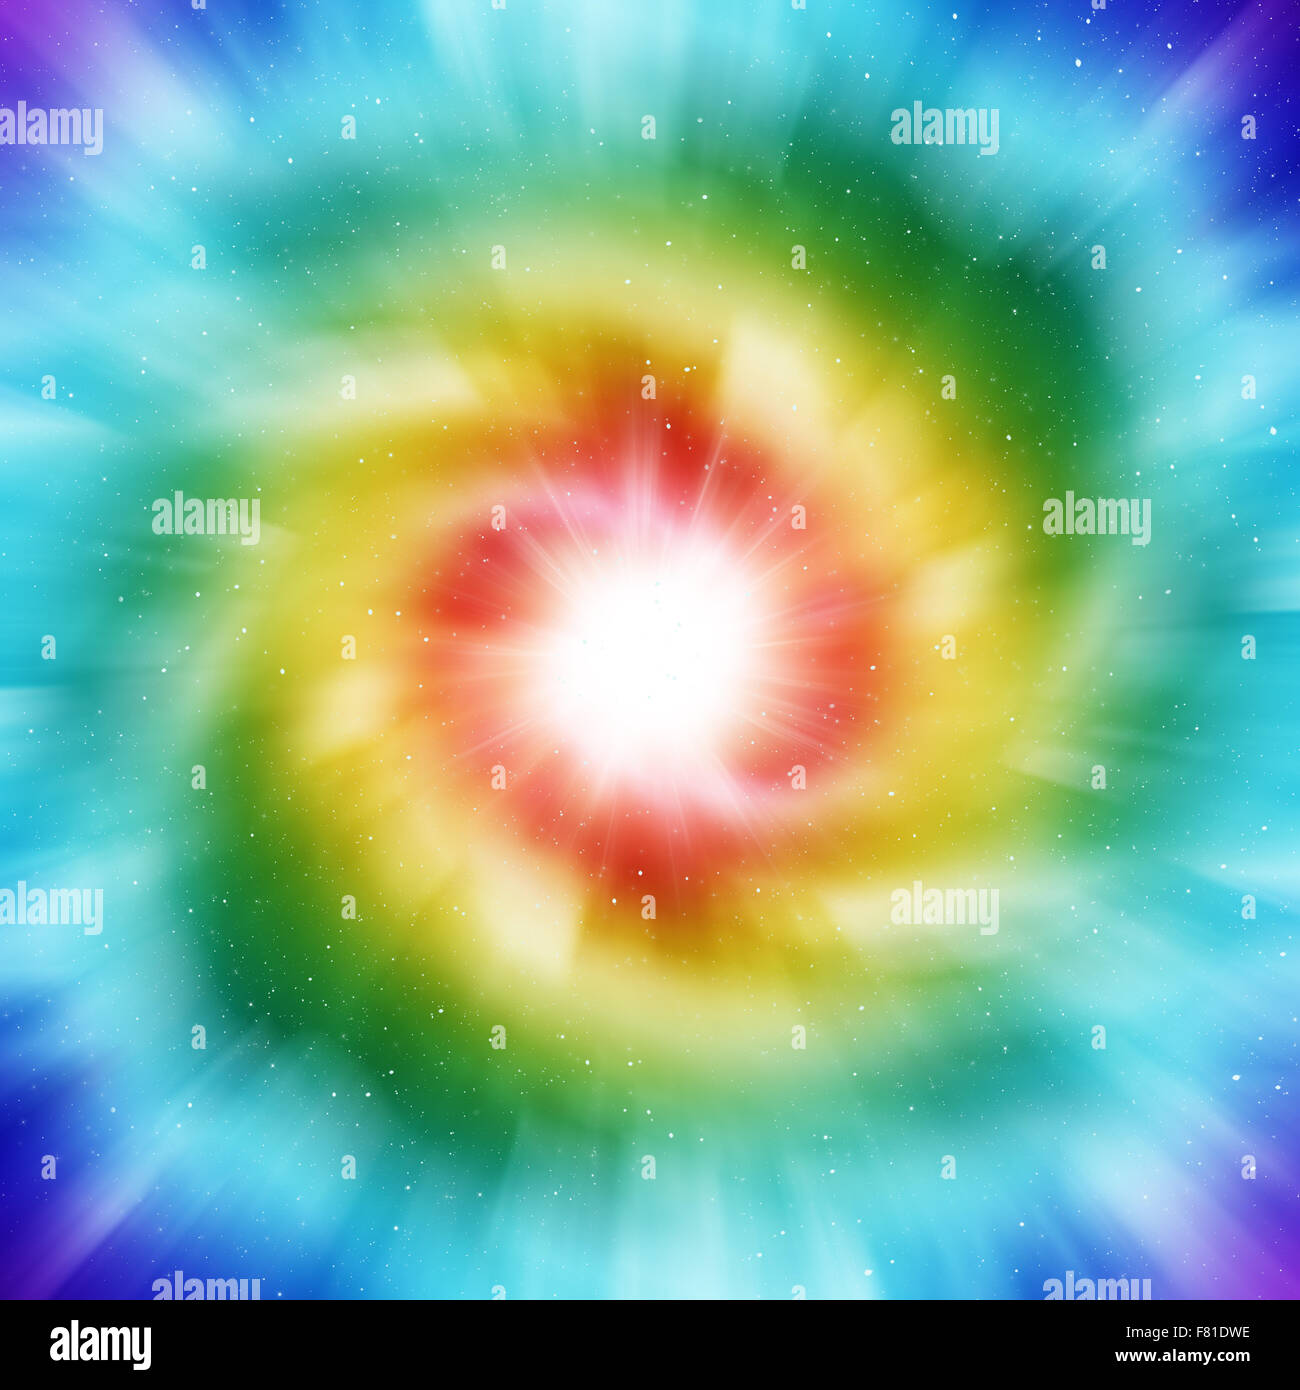 Farbige Spiralgalaxie Stockfoto